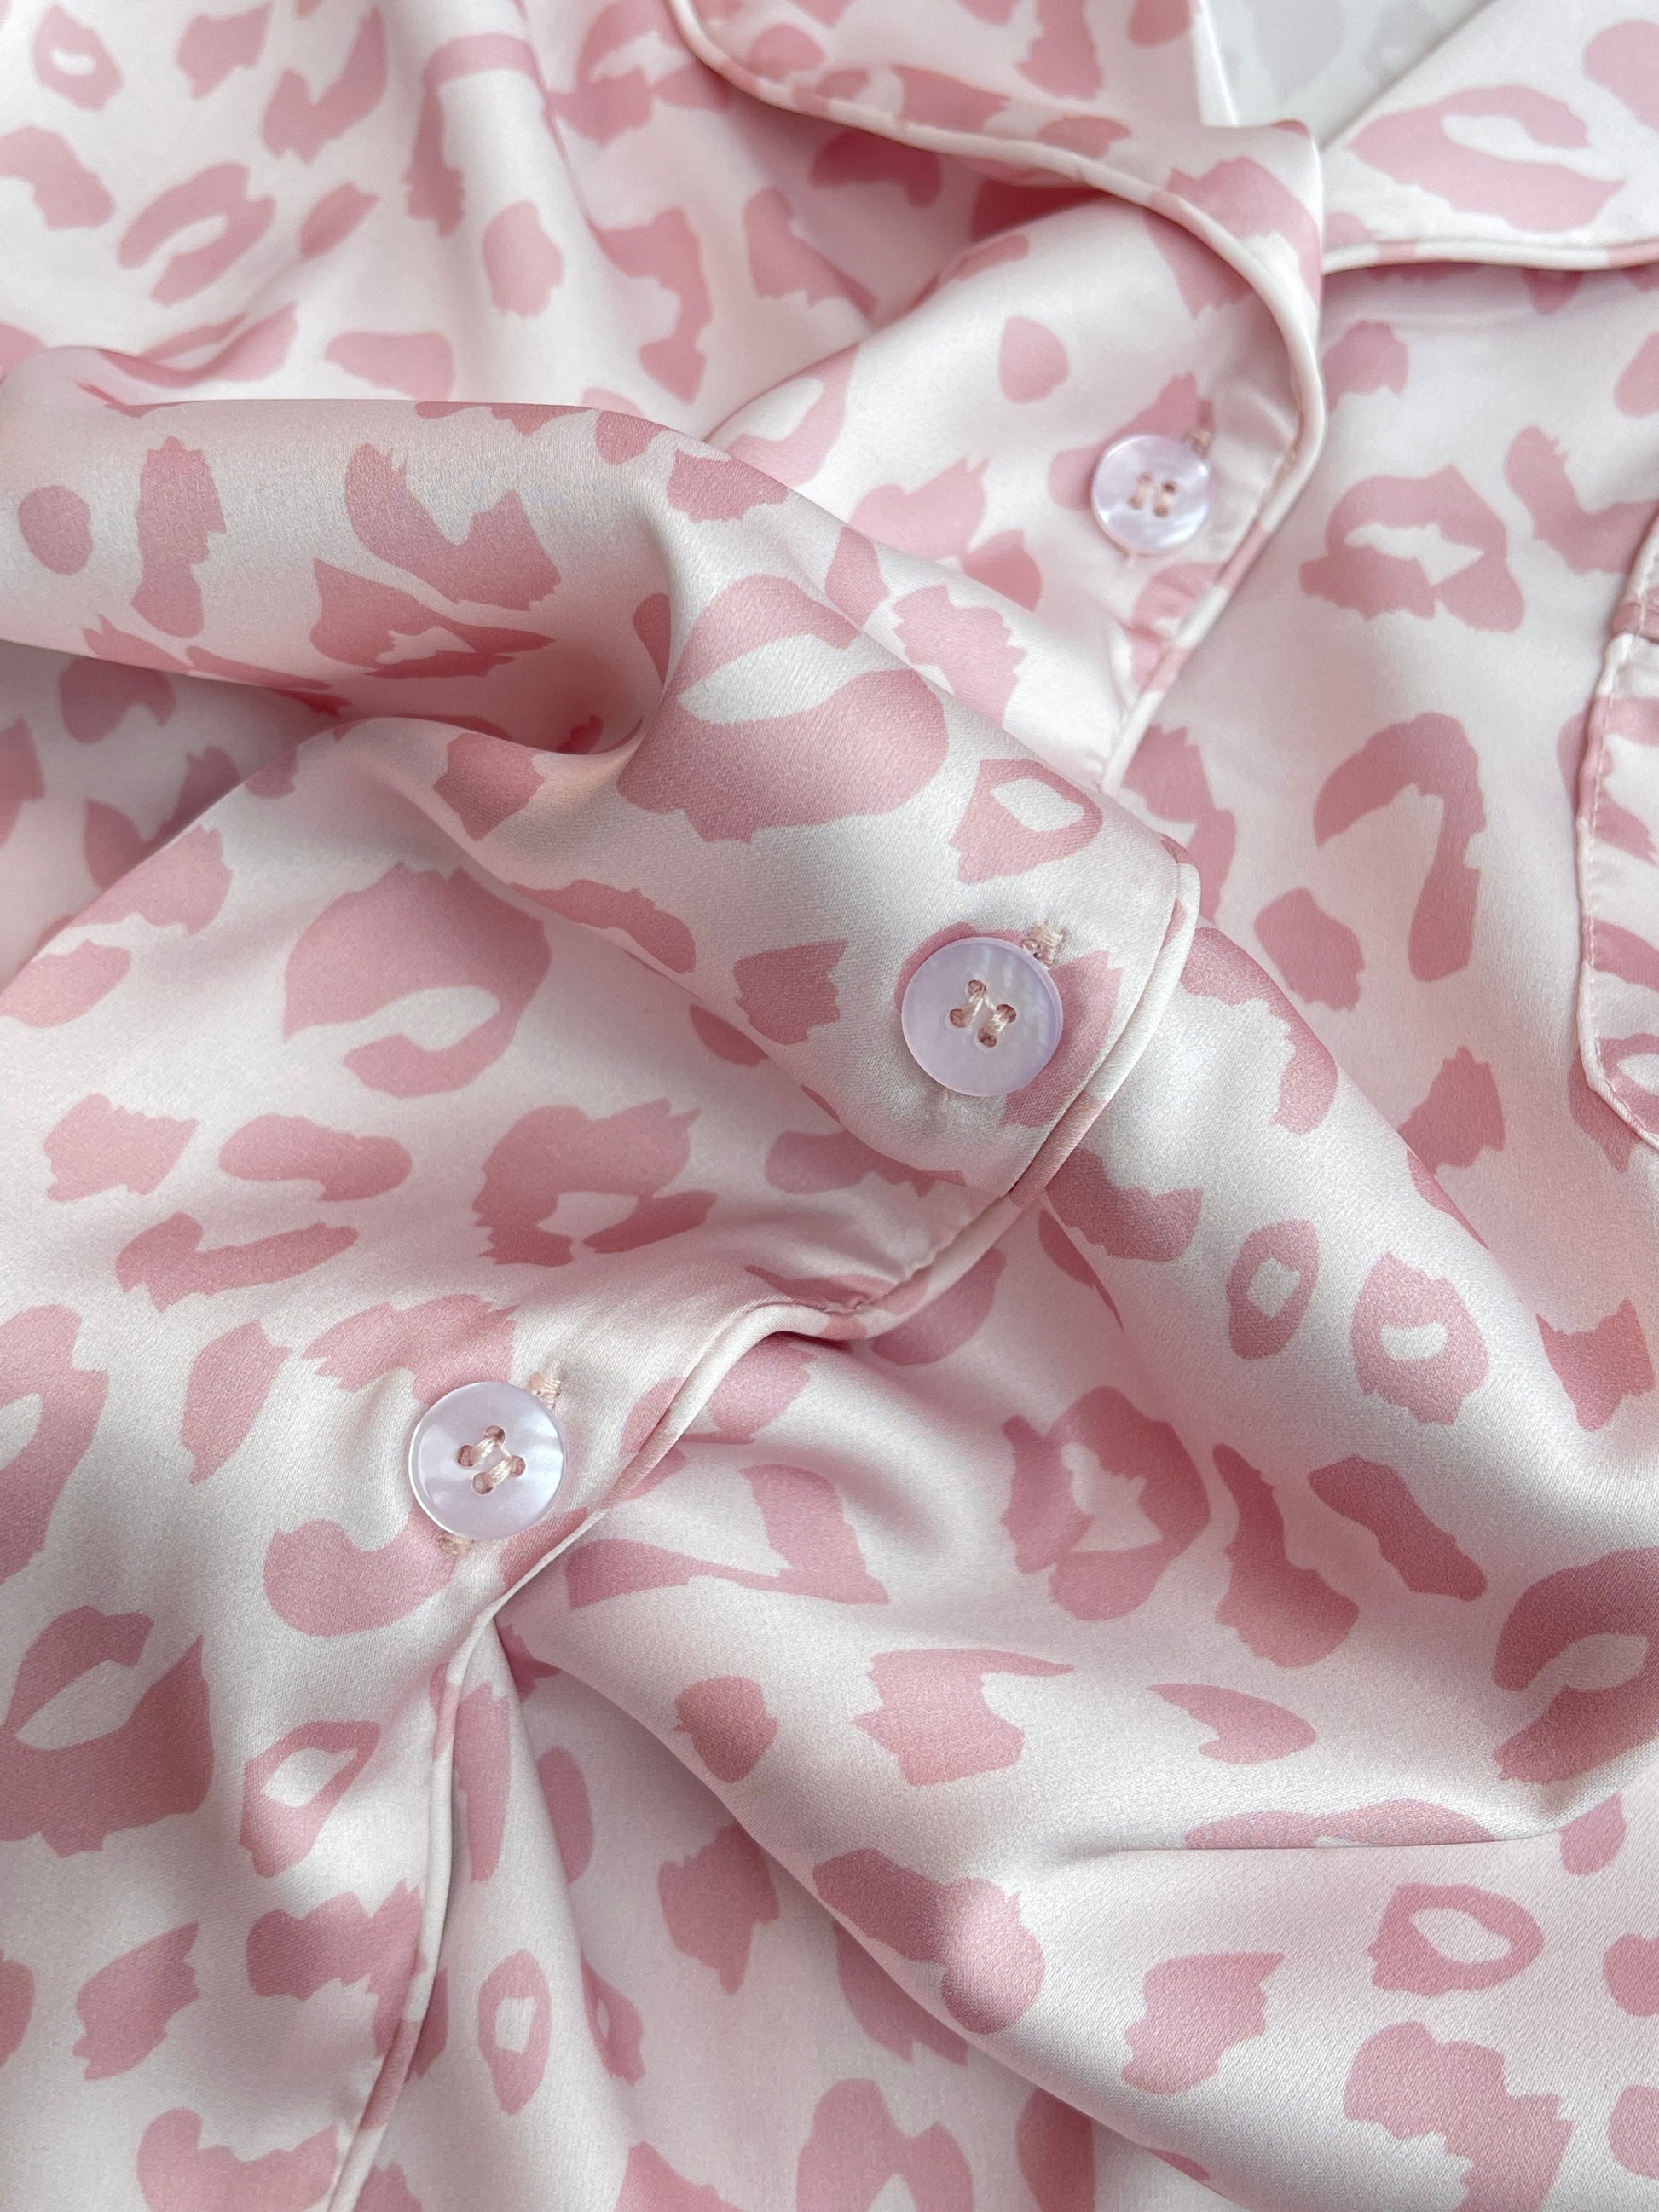  Womens Satin Pajama Set 2-Piece Sleepwear